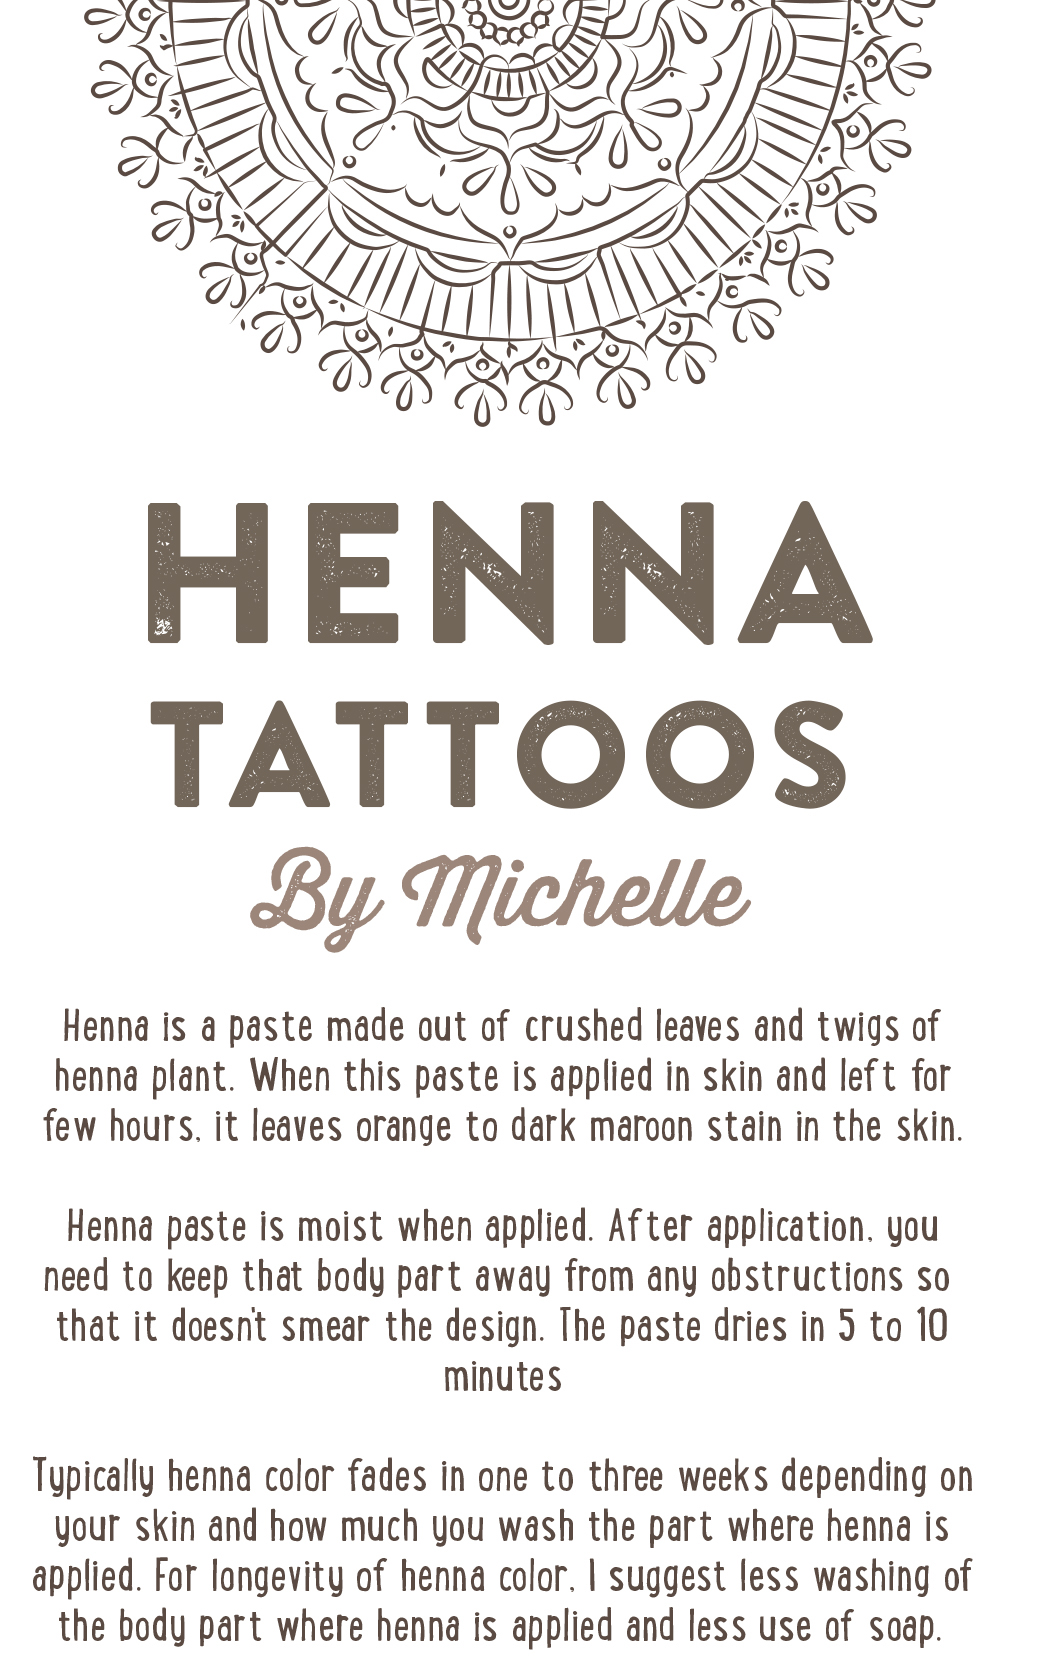 henna tattoo henna tat tat Face painting parties indian ethnis